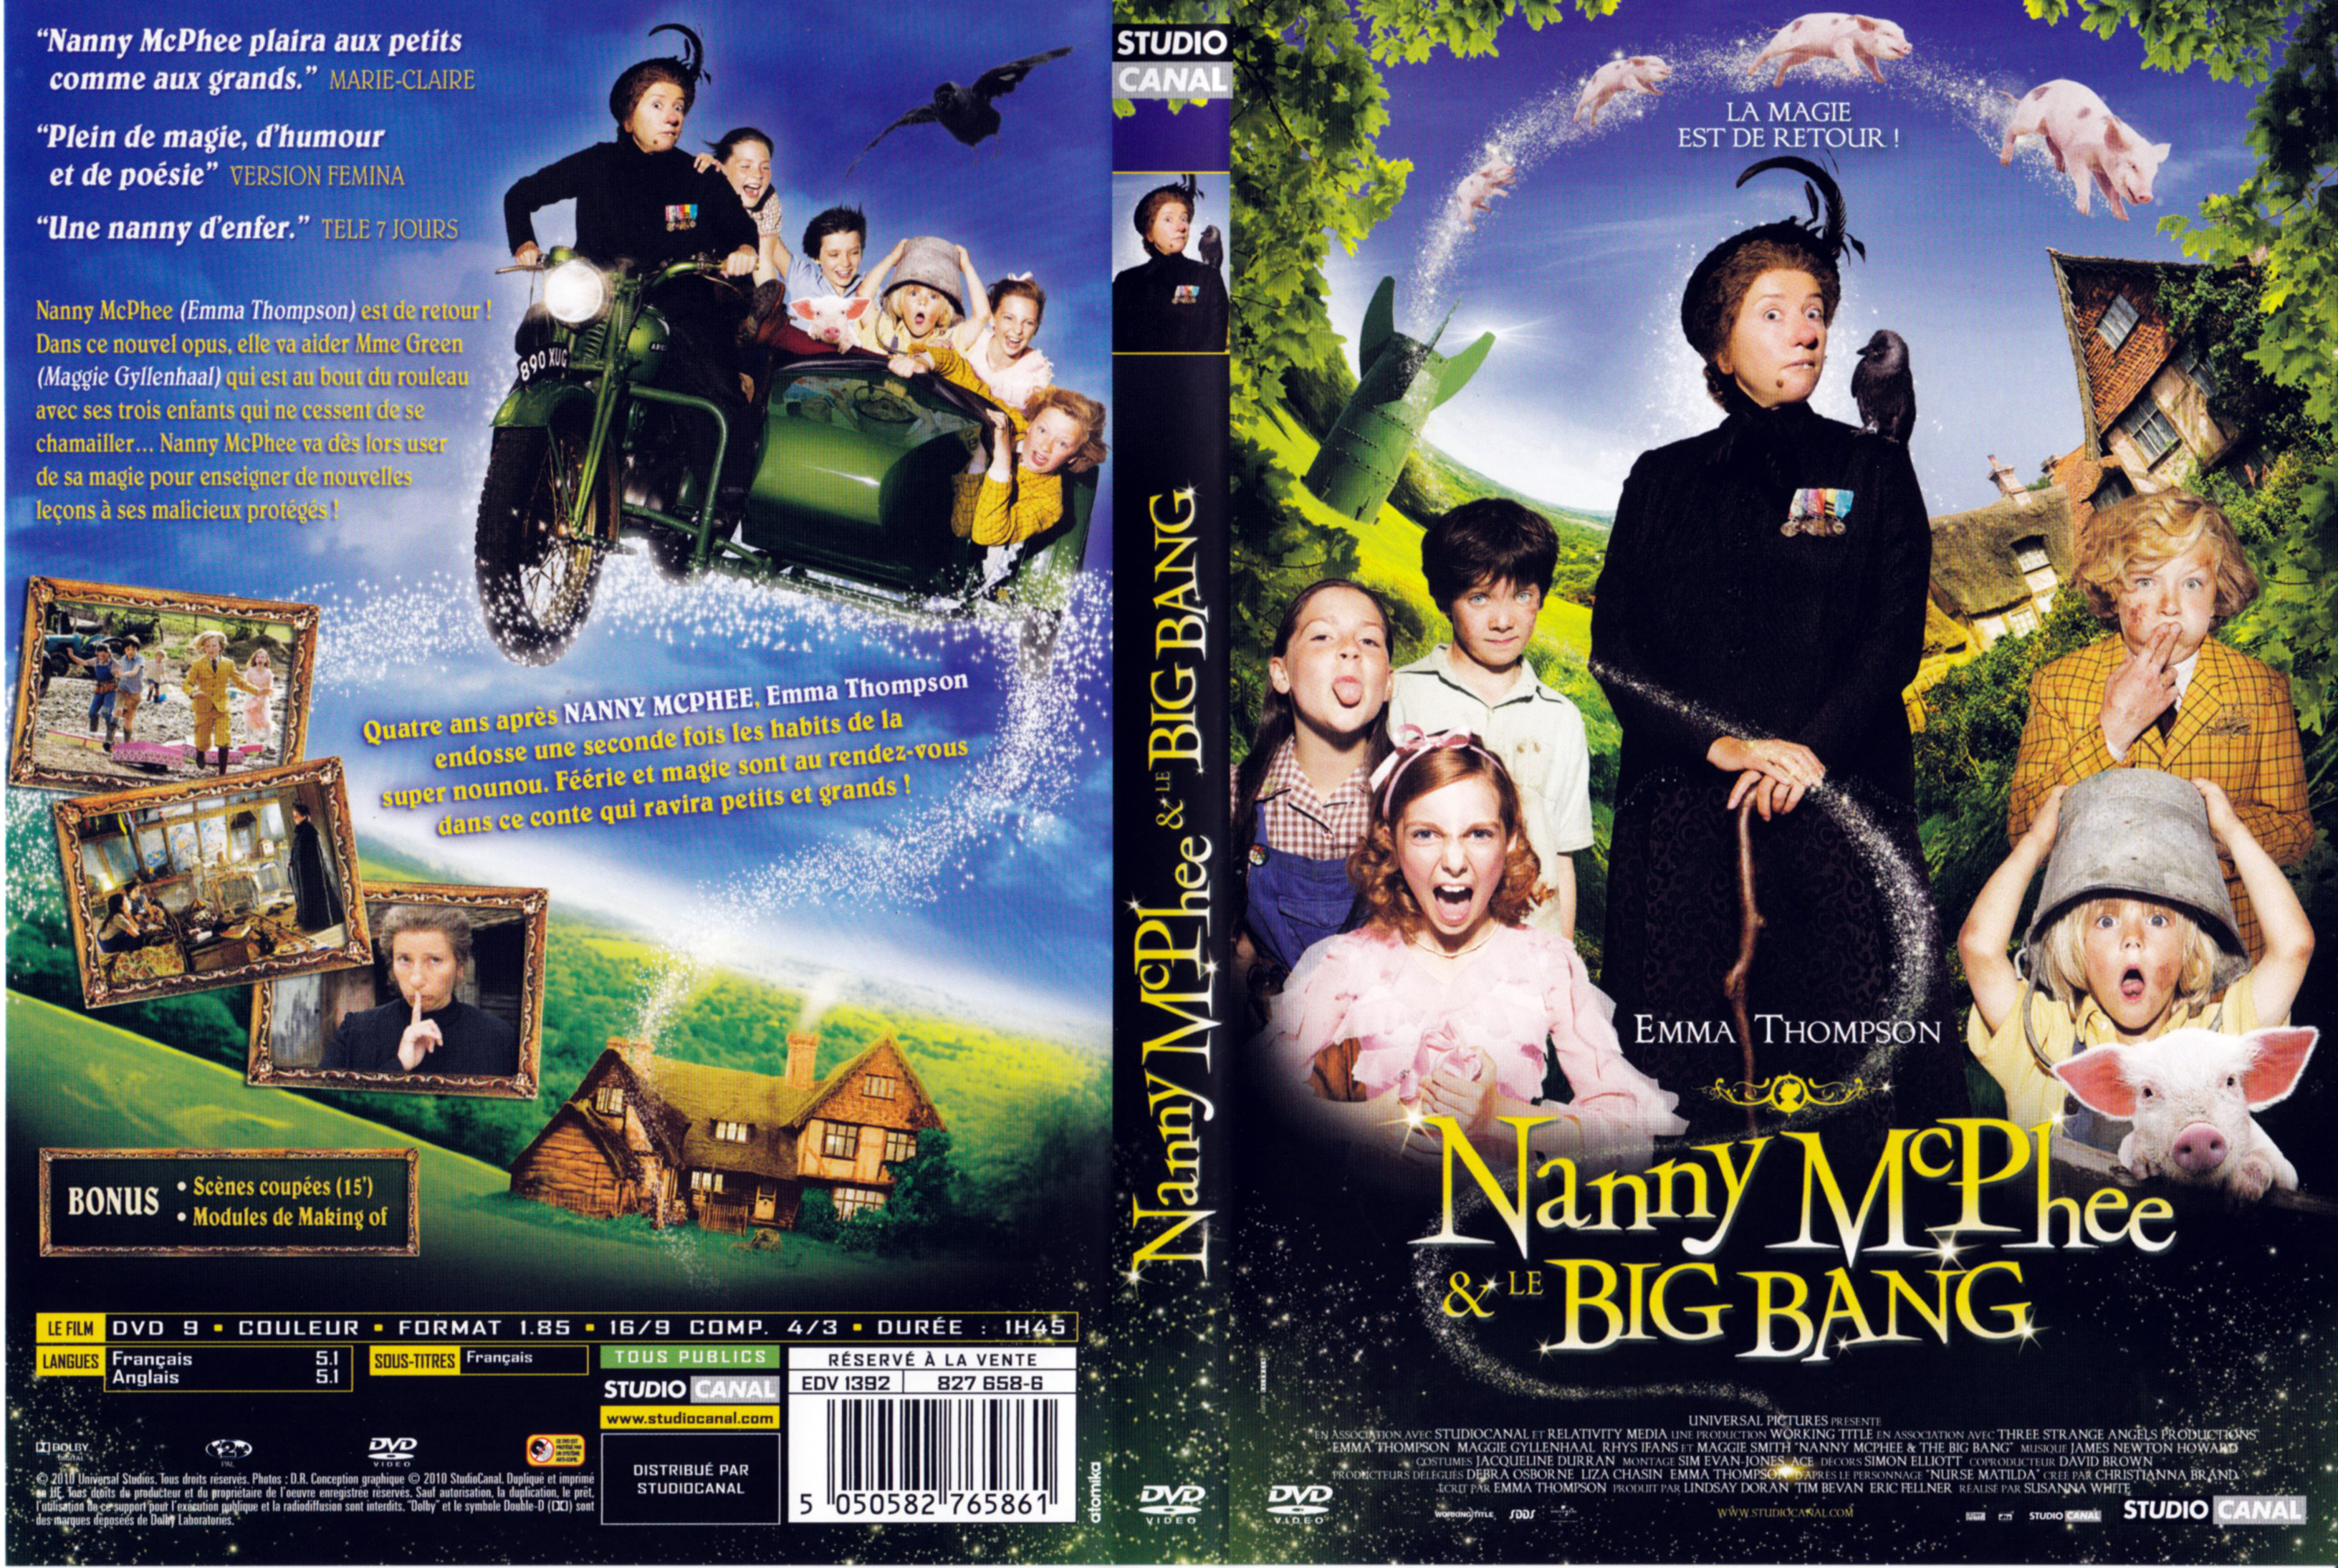 Jaquette DVD Nanny McPhee et le big bang